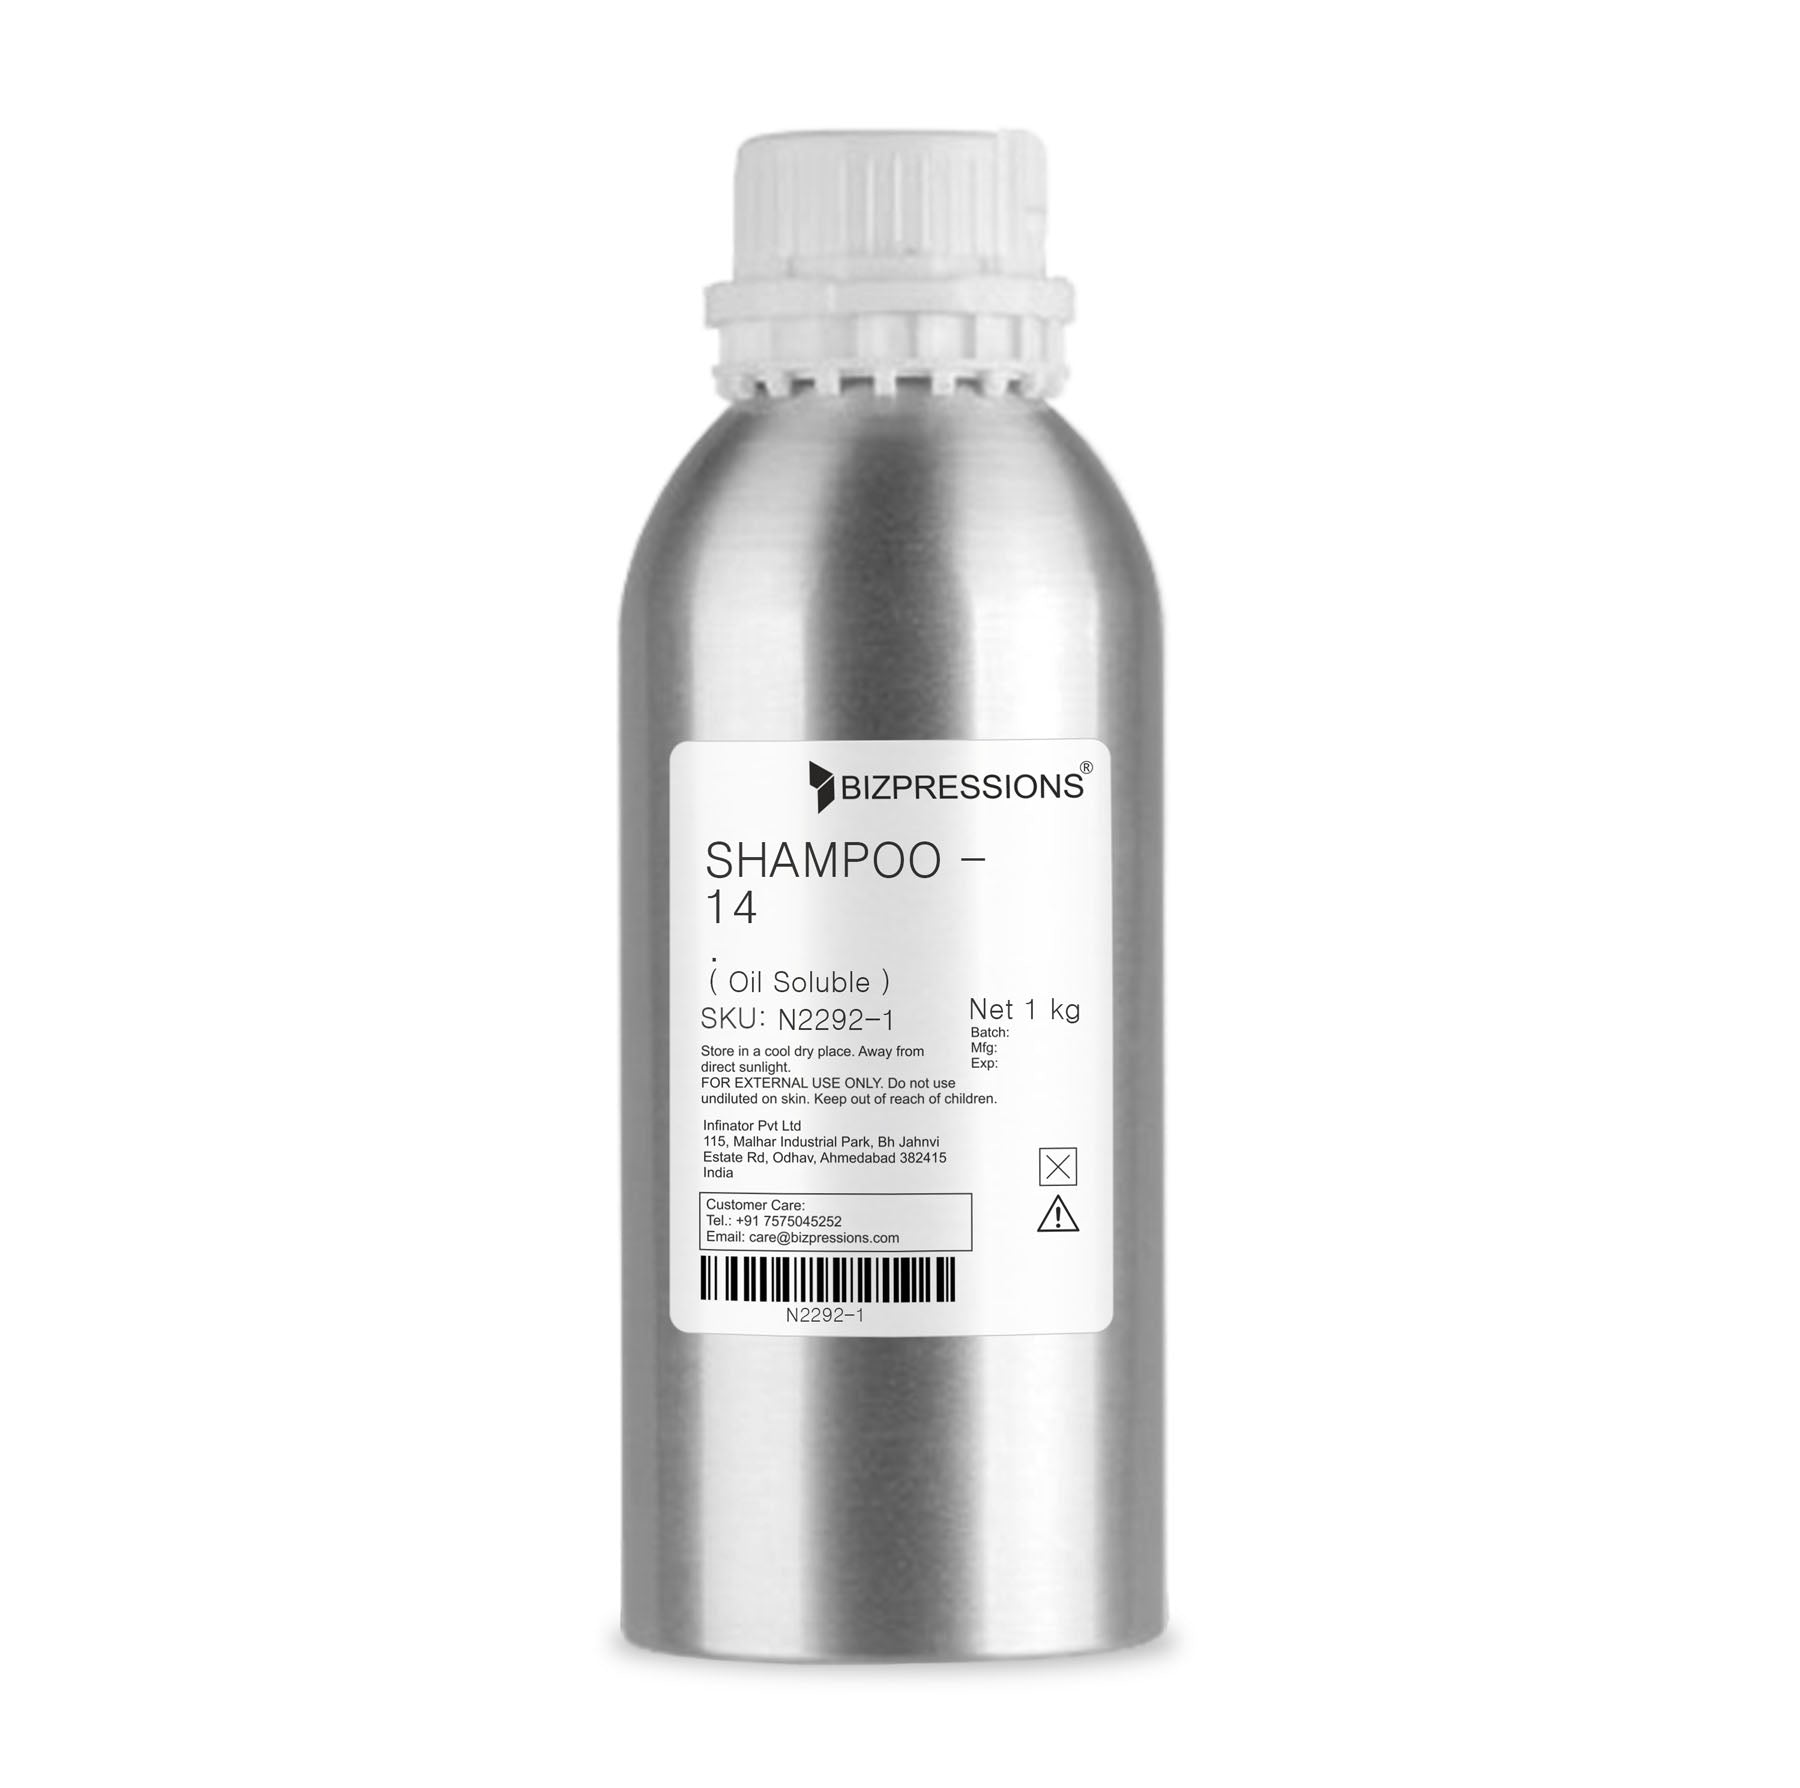 SHAMPOO - 14 - Fragrance ( Oil Soluble ) - 1 kg